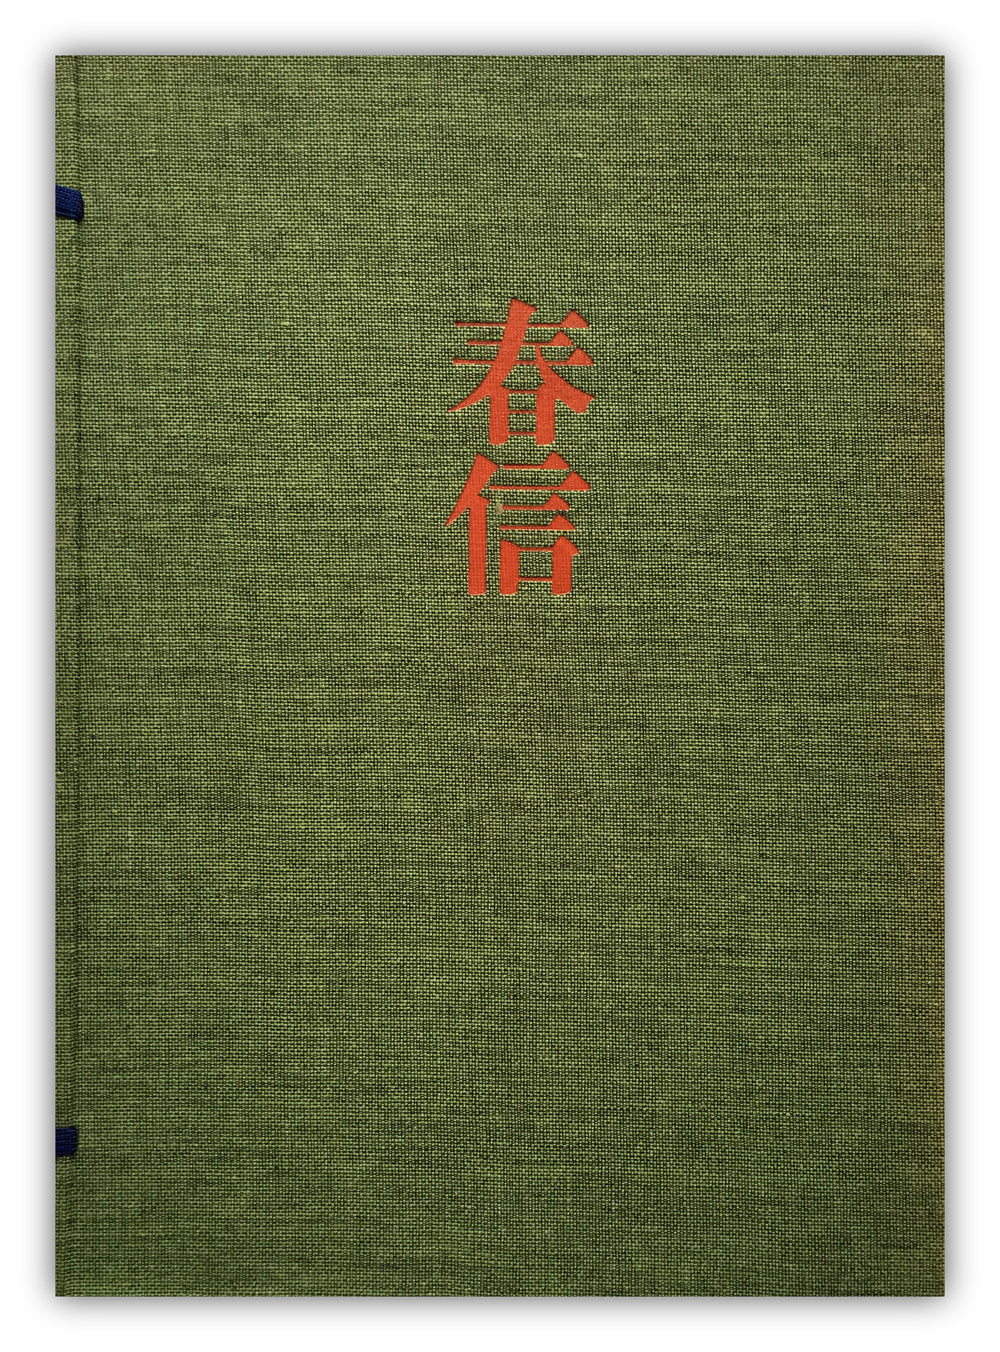 HARUNOBU - Complete Collection Ukiyo-e Print 1 Shueisha Edition